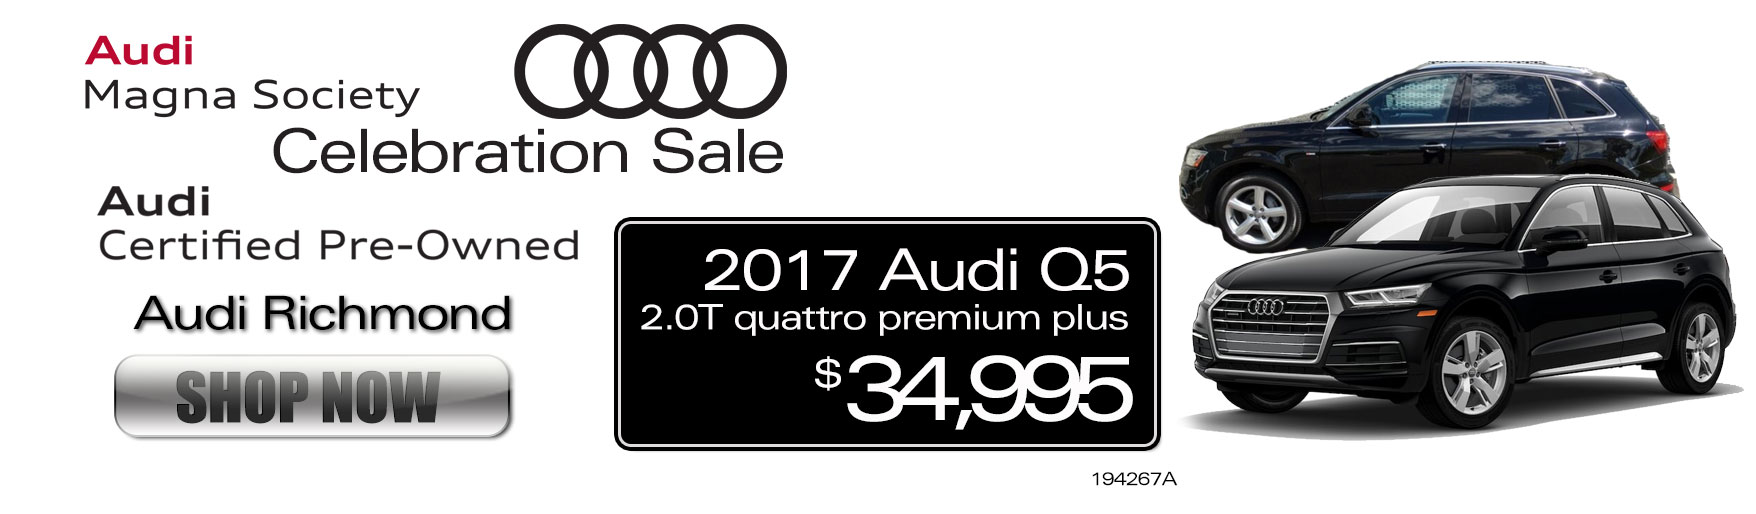 Audi Dealership Richmond Va